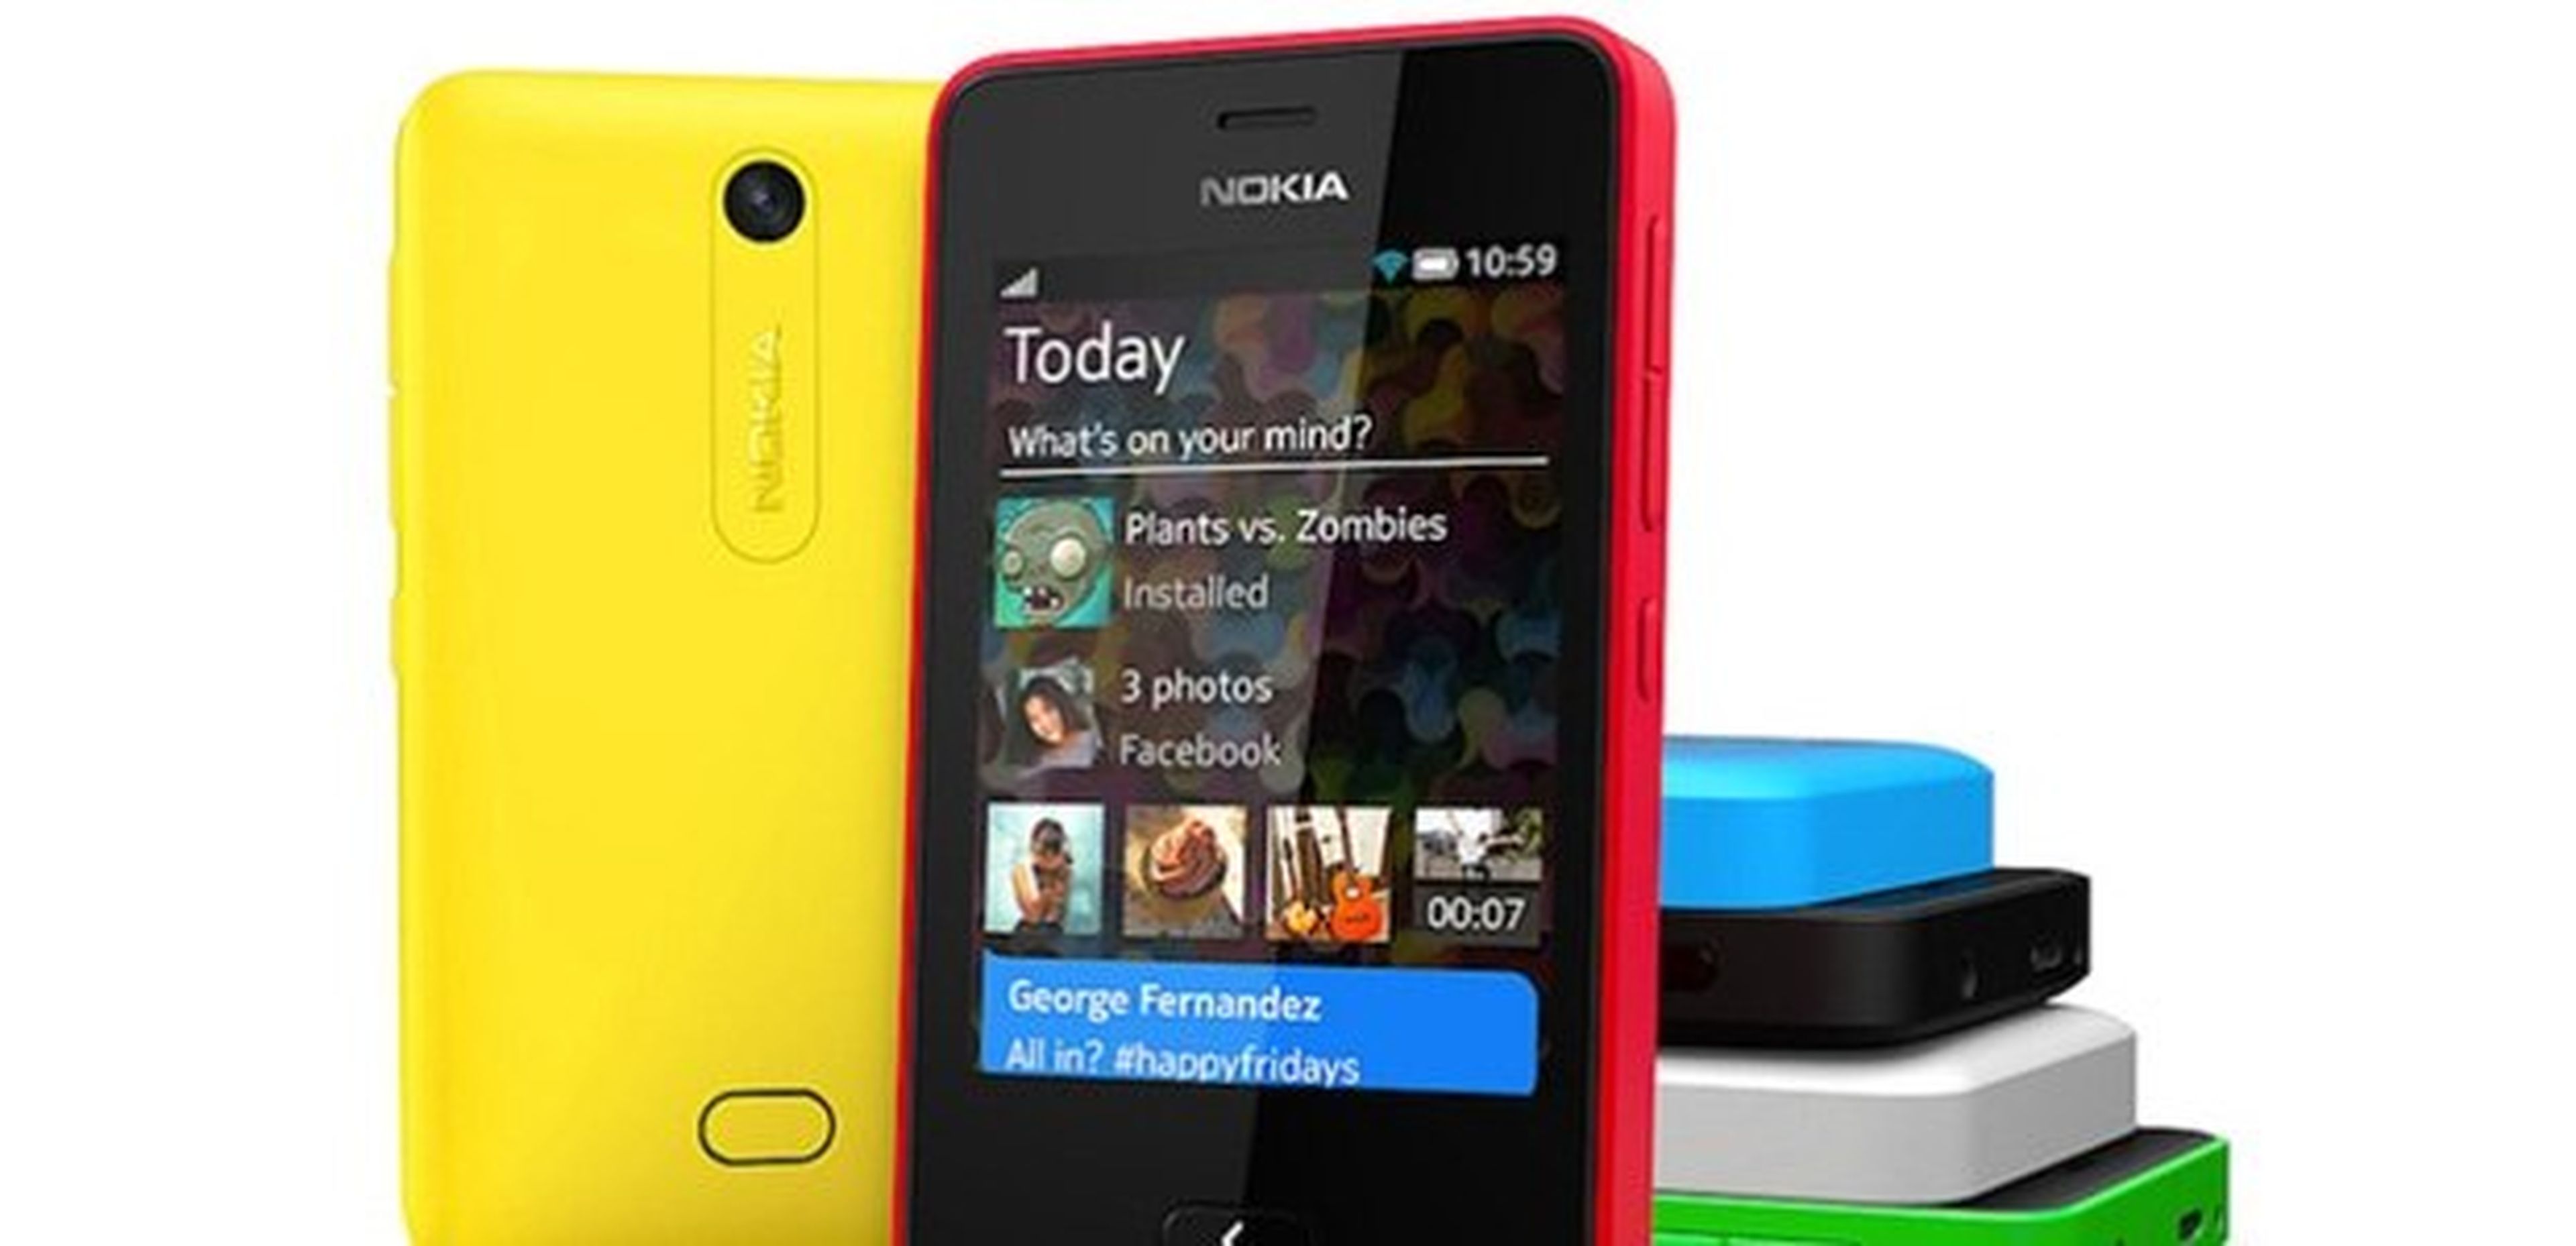 Gama Nokia Asha